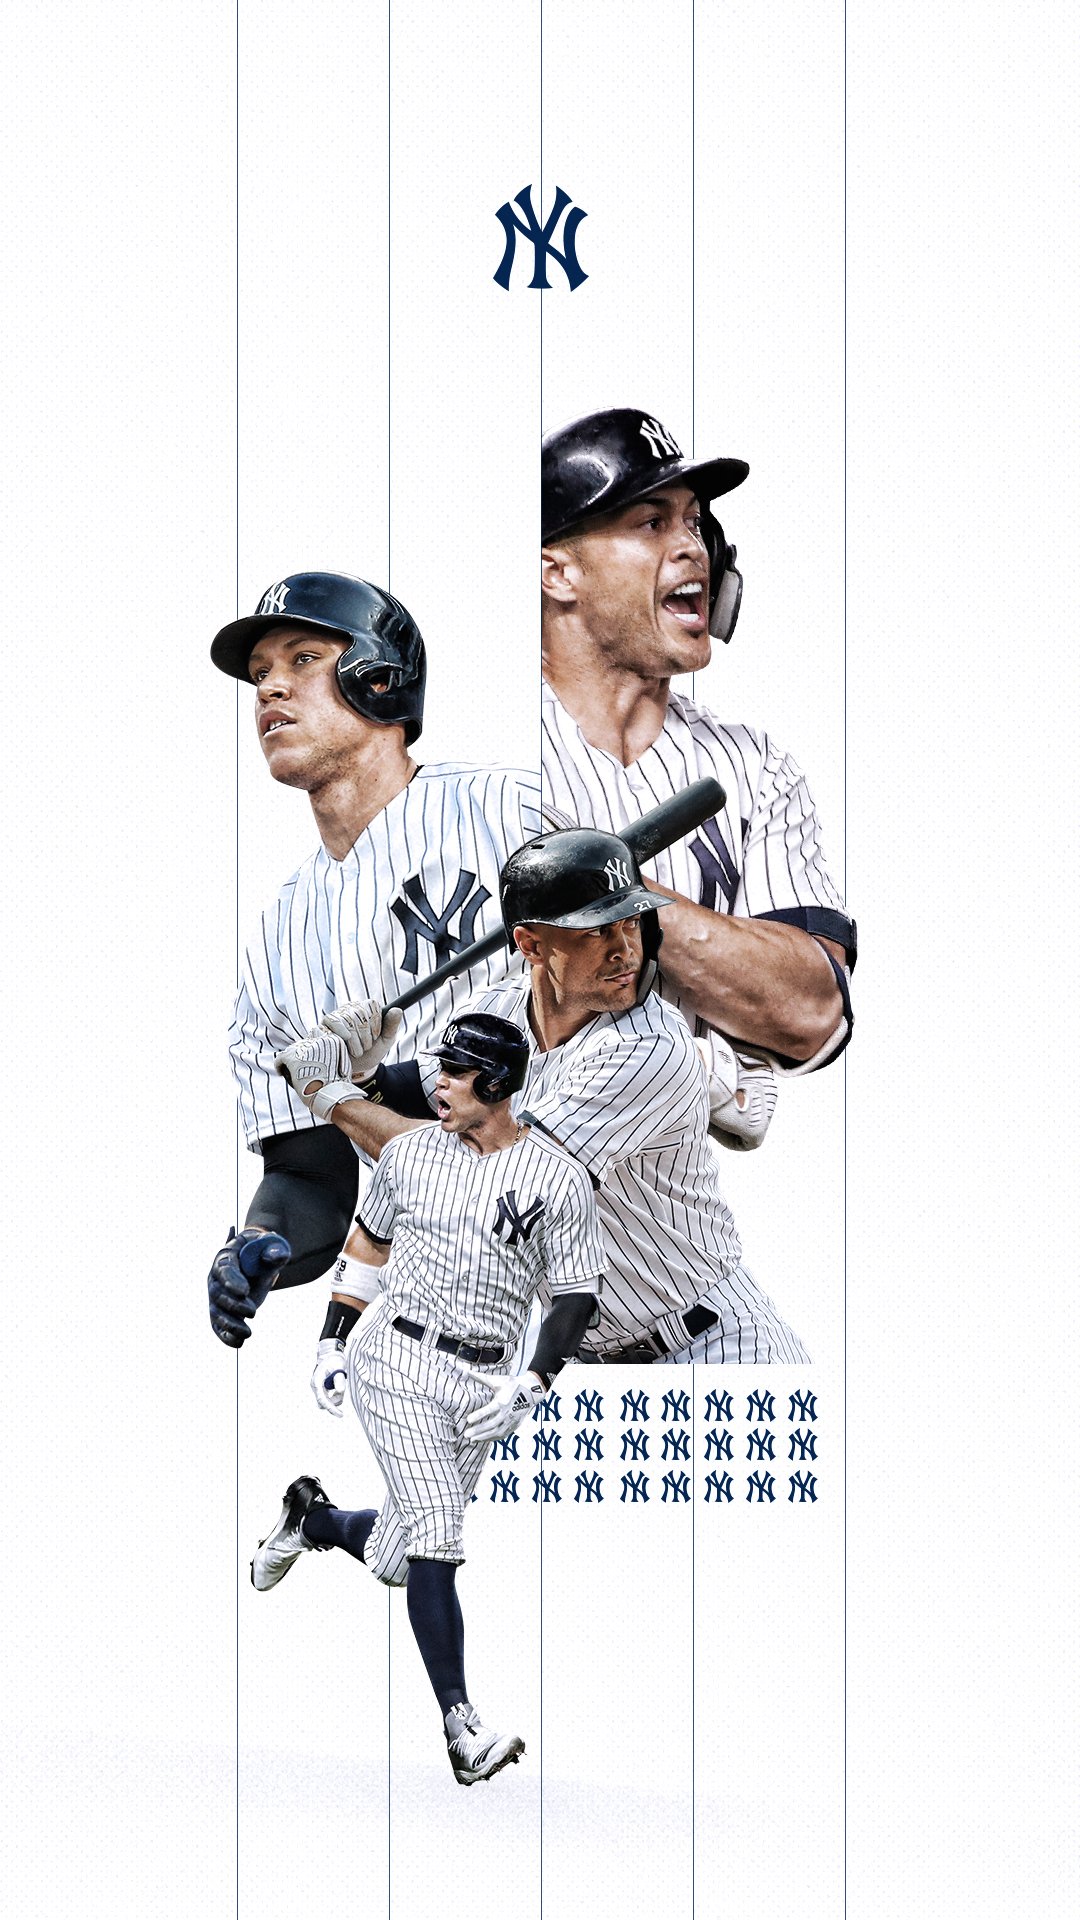 Yankees 2021 Wallpapers